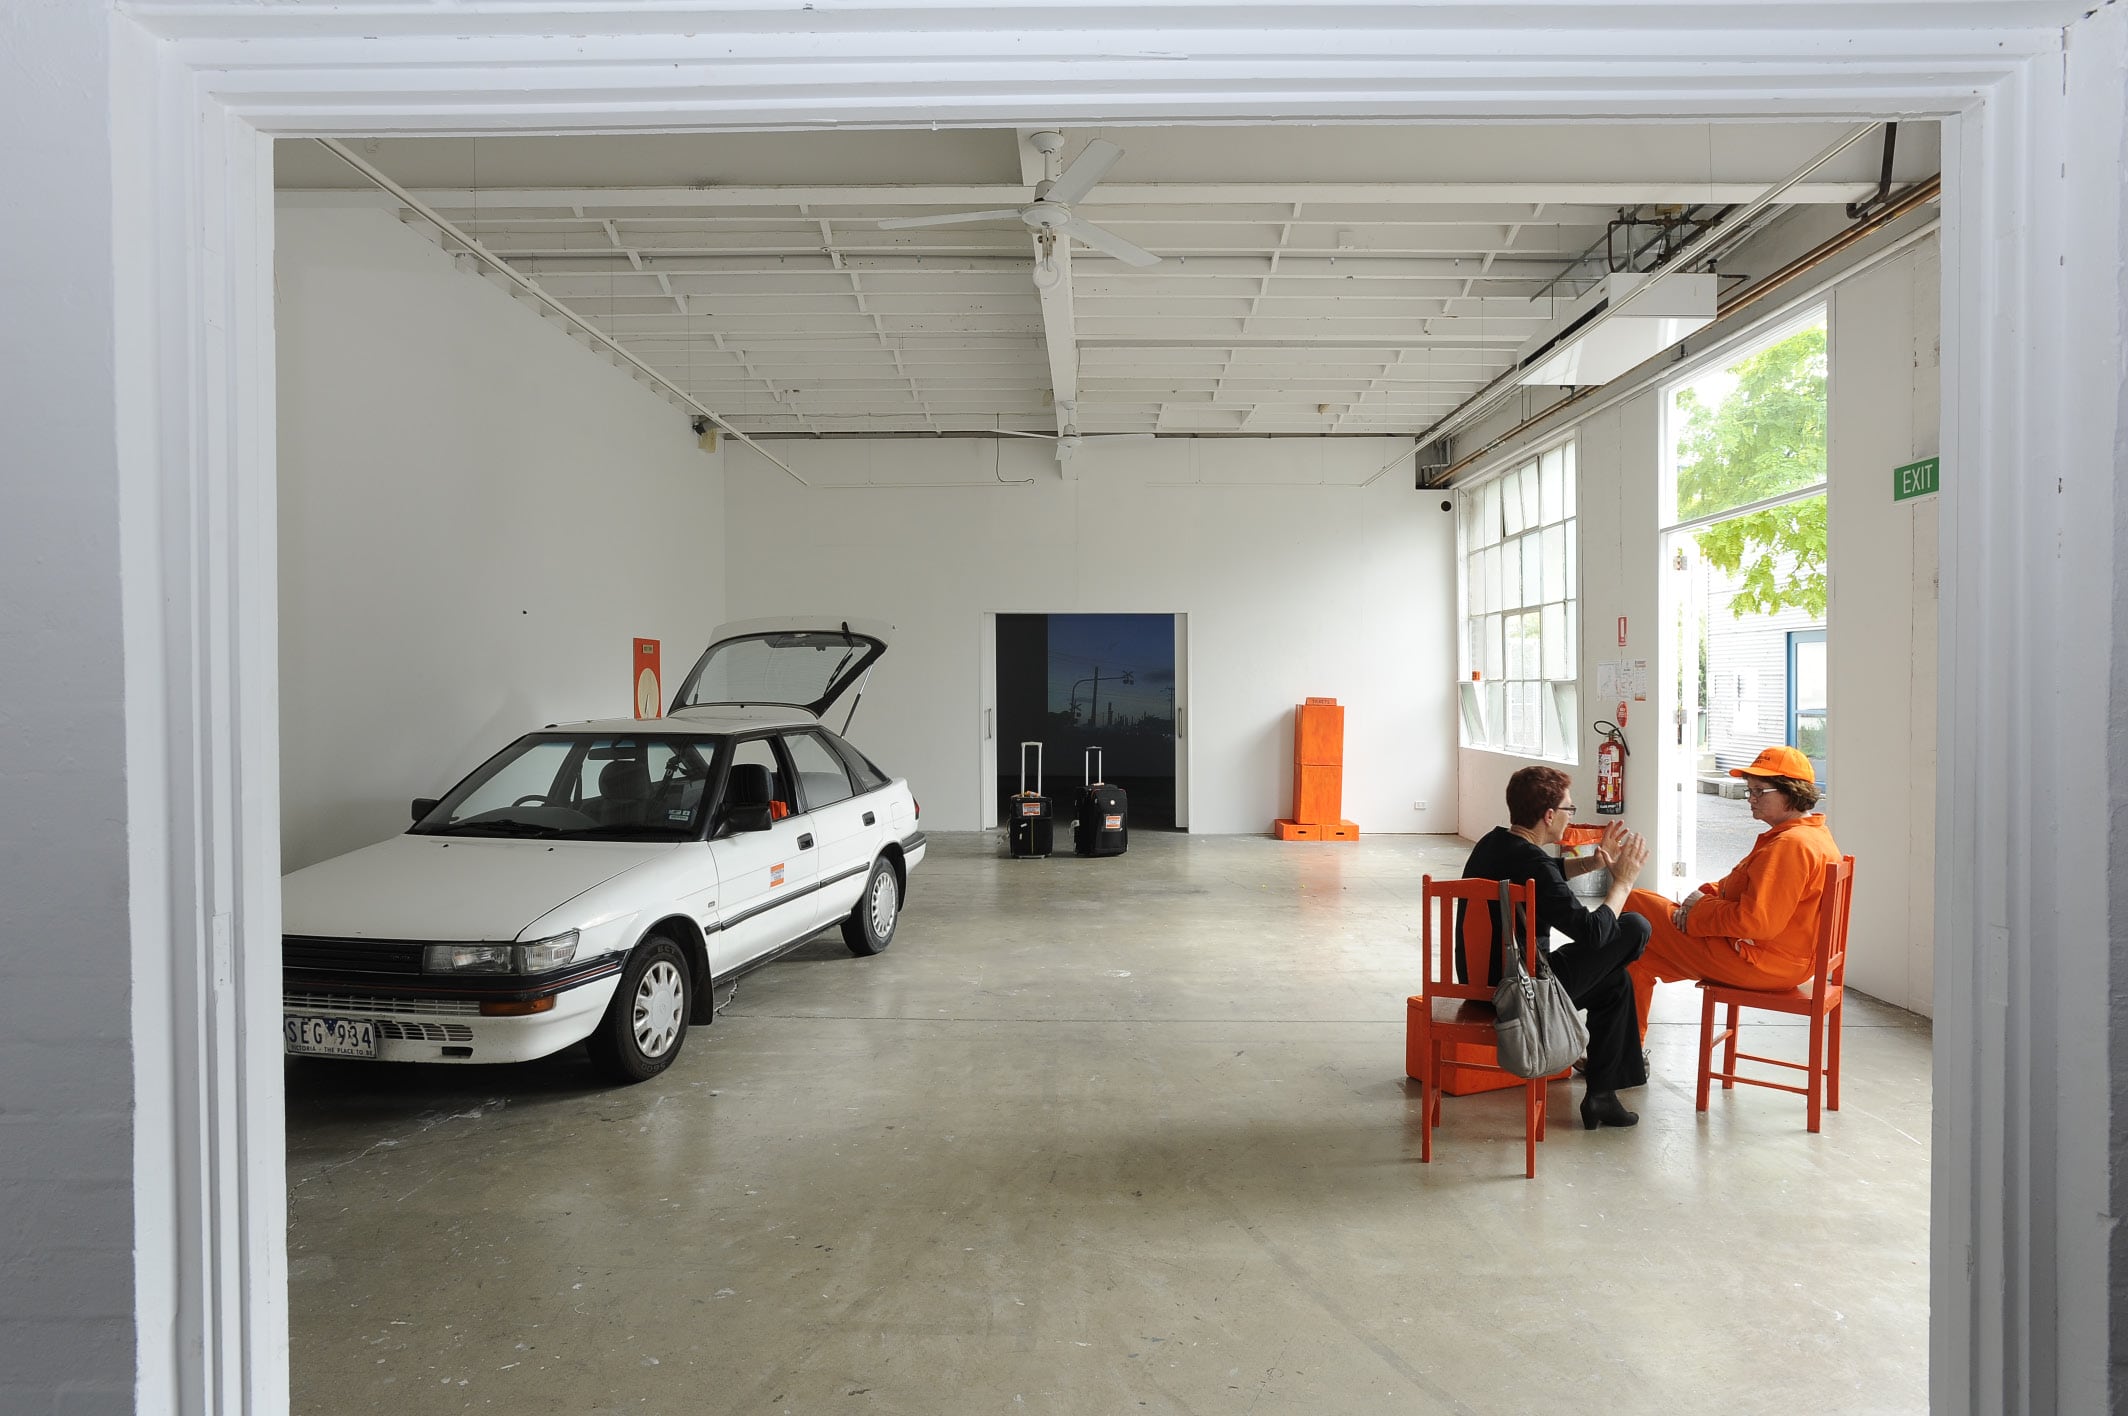 Kim Donaldson, tomorrow a well 2013, installation view, photograph: John Brash